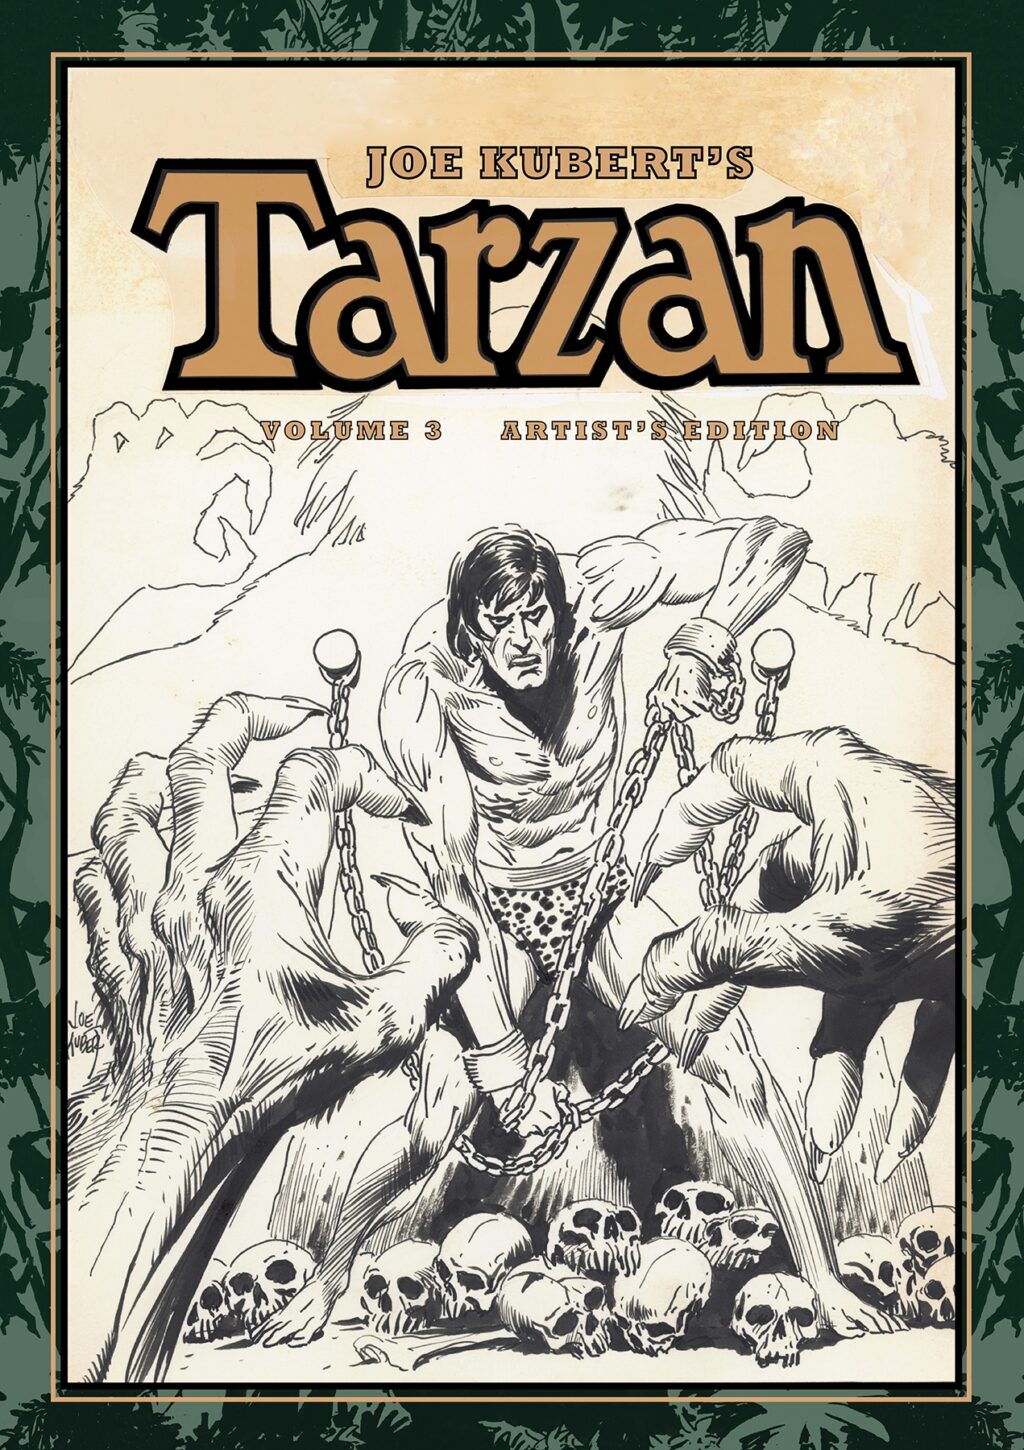 Joe Kubert's Tarzan And The Lion Man Artist's Edition cover prelim